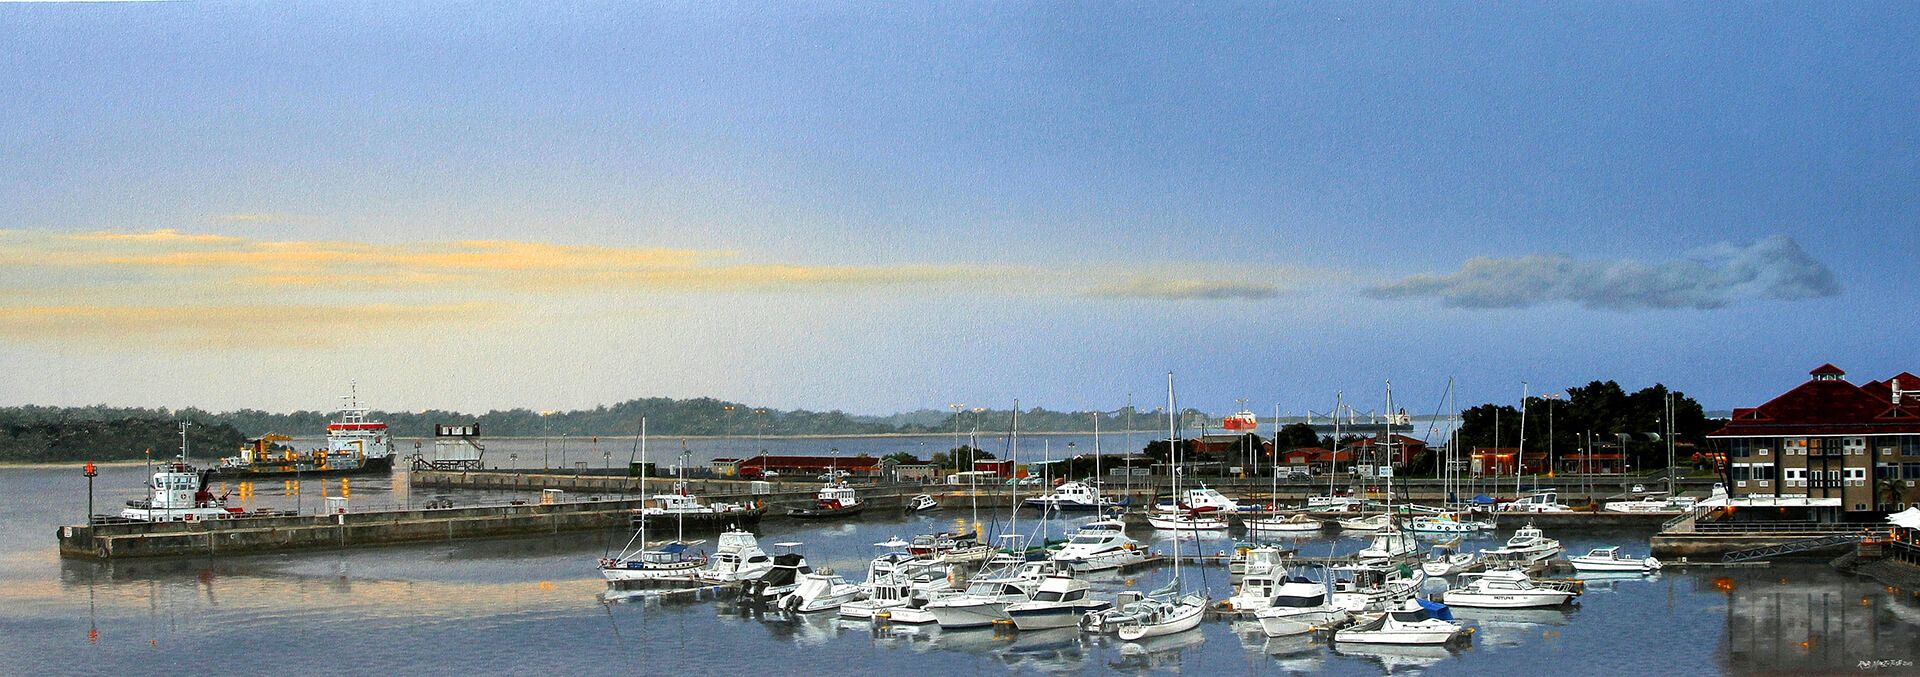 Photorealistic painting of Richard's Bay